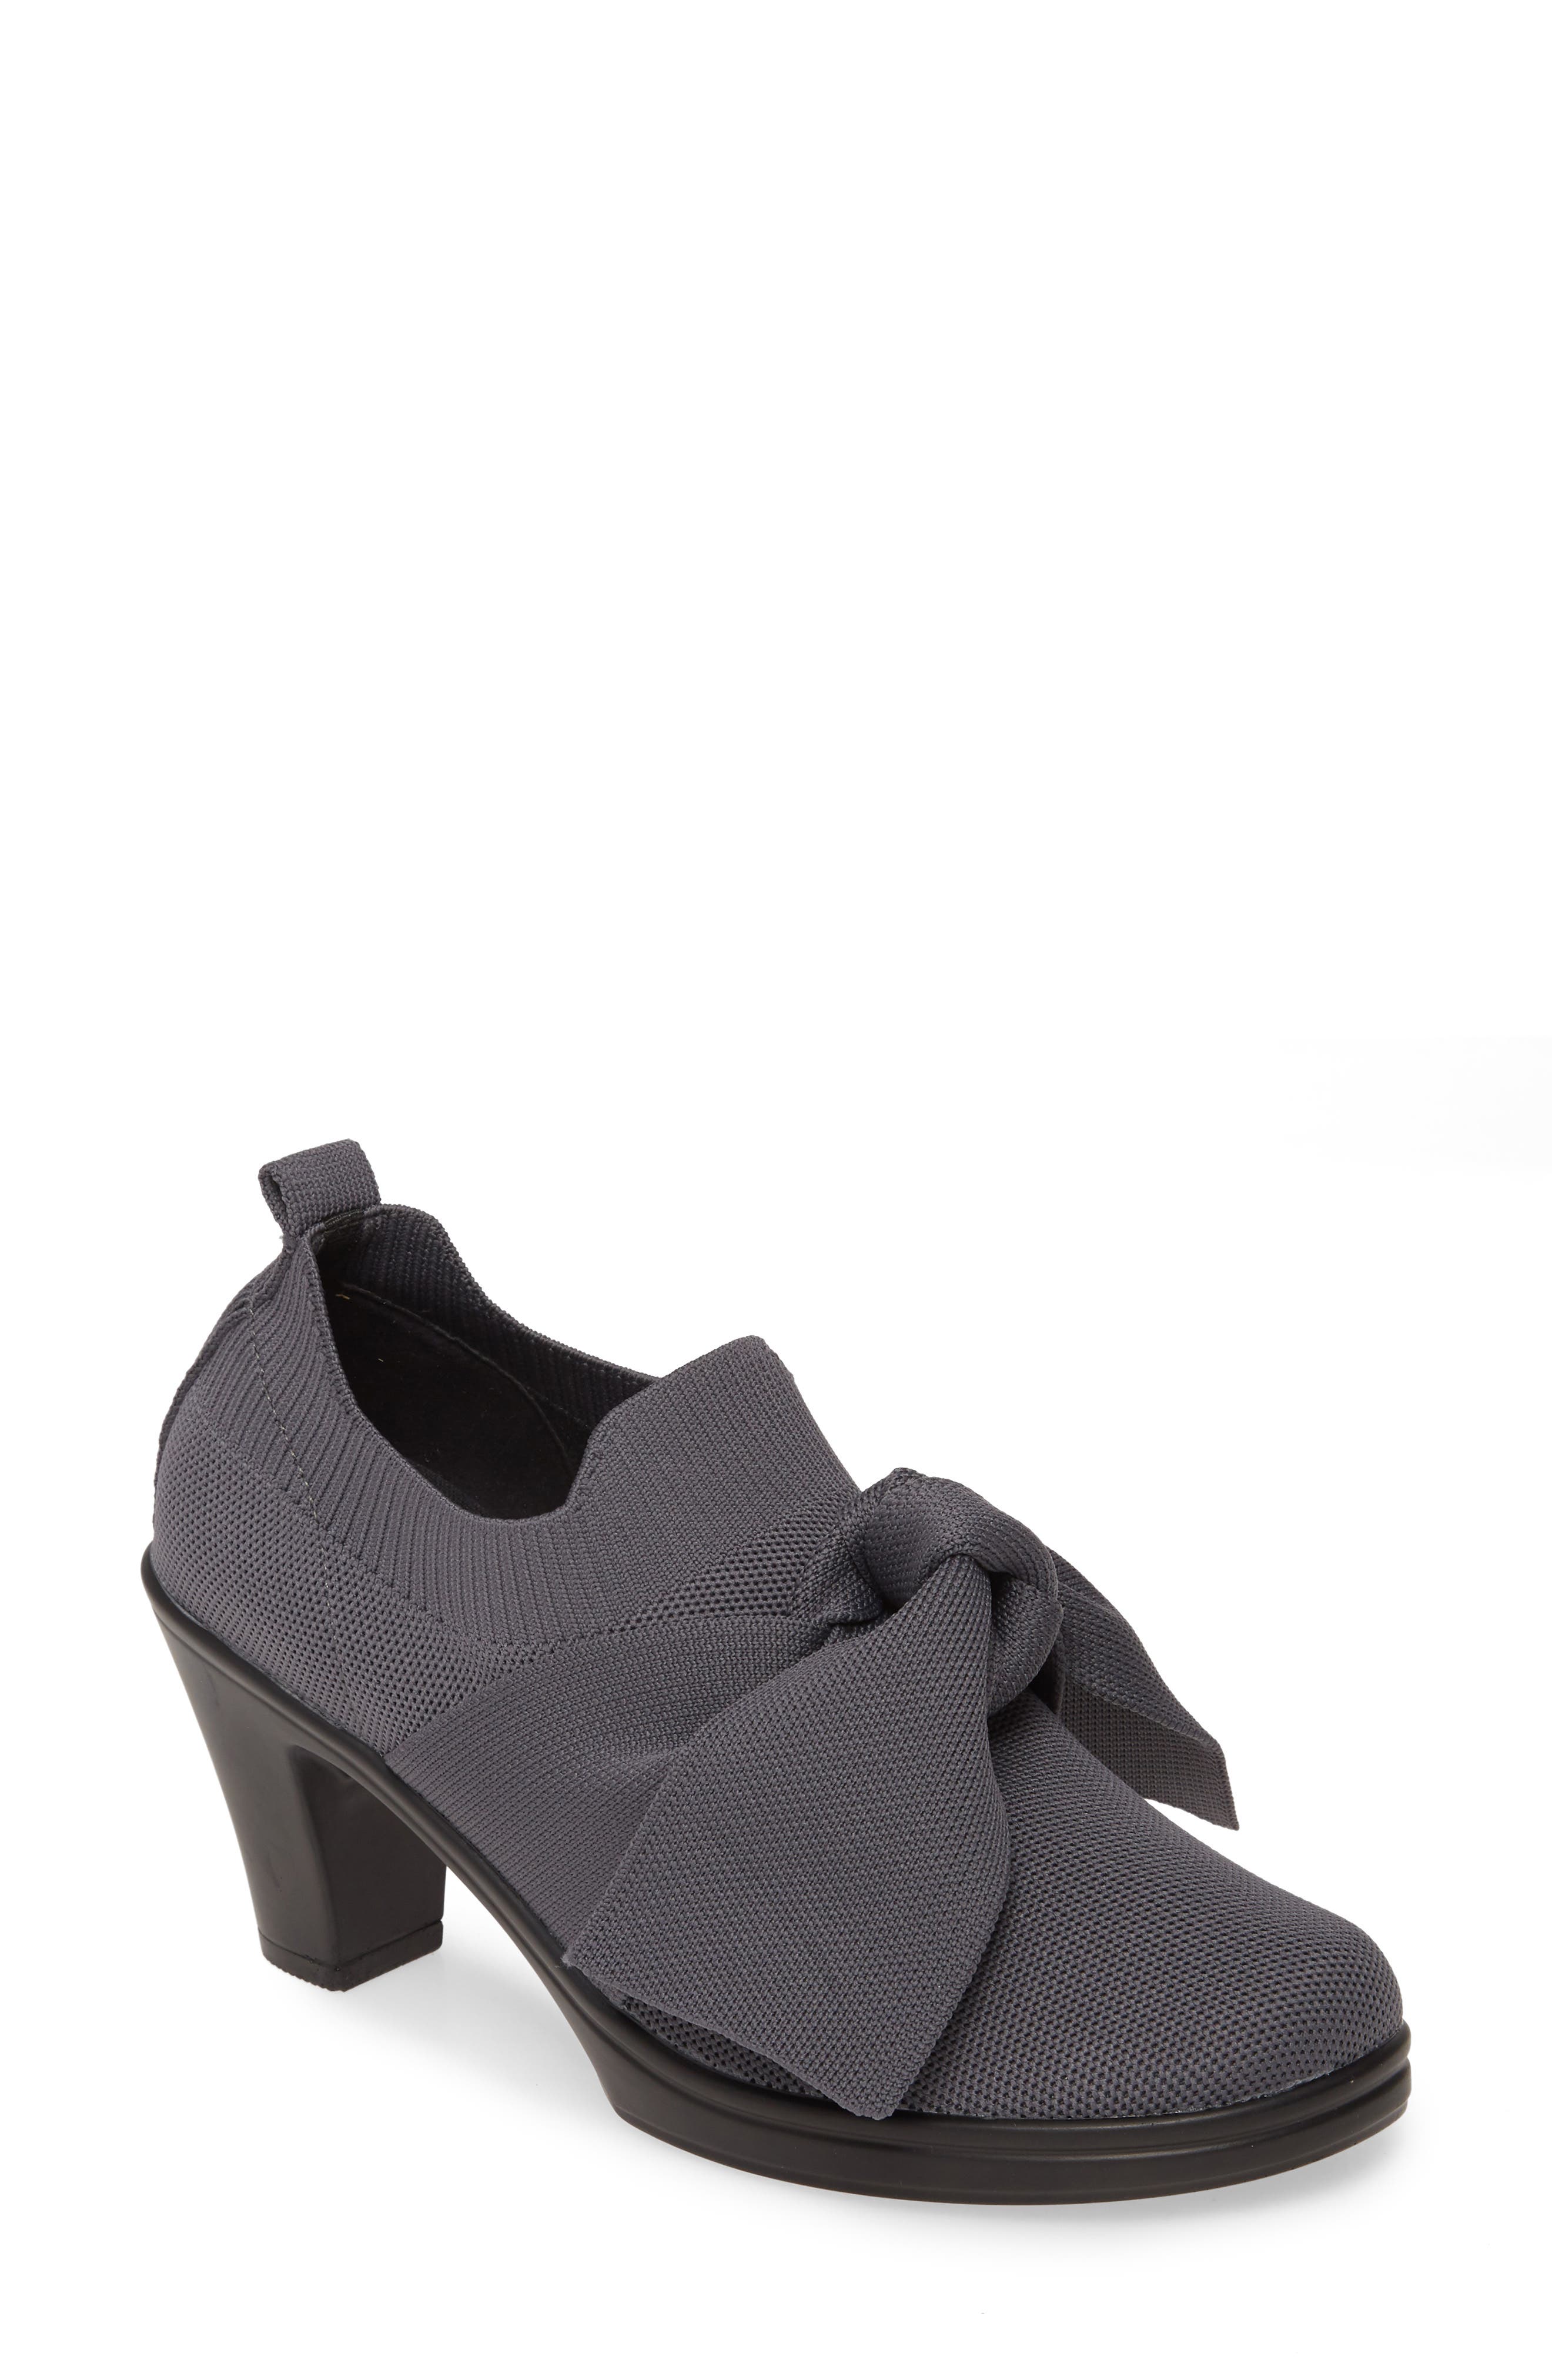 Women's bernie mev. Shoes | Nordstrom